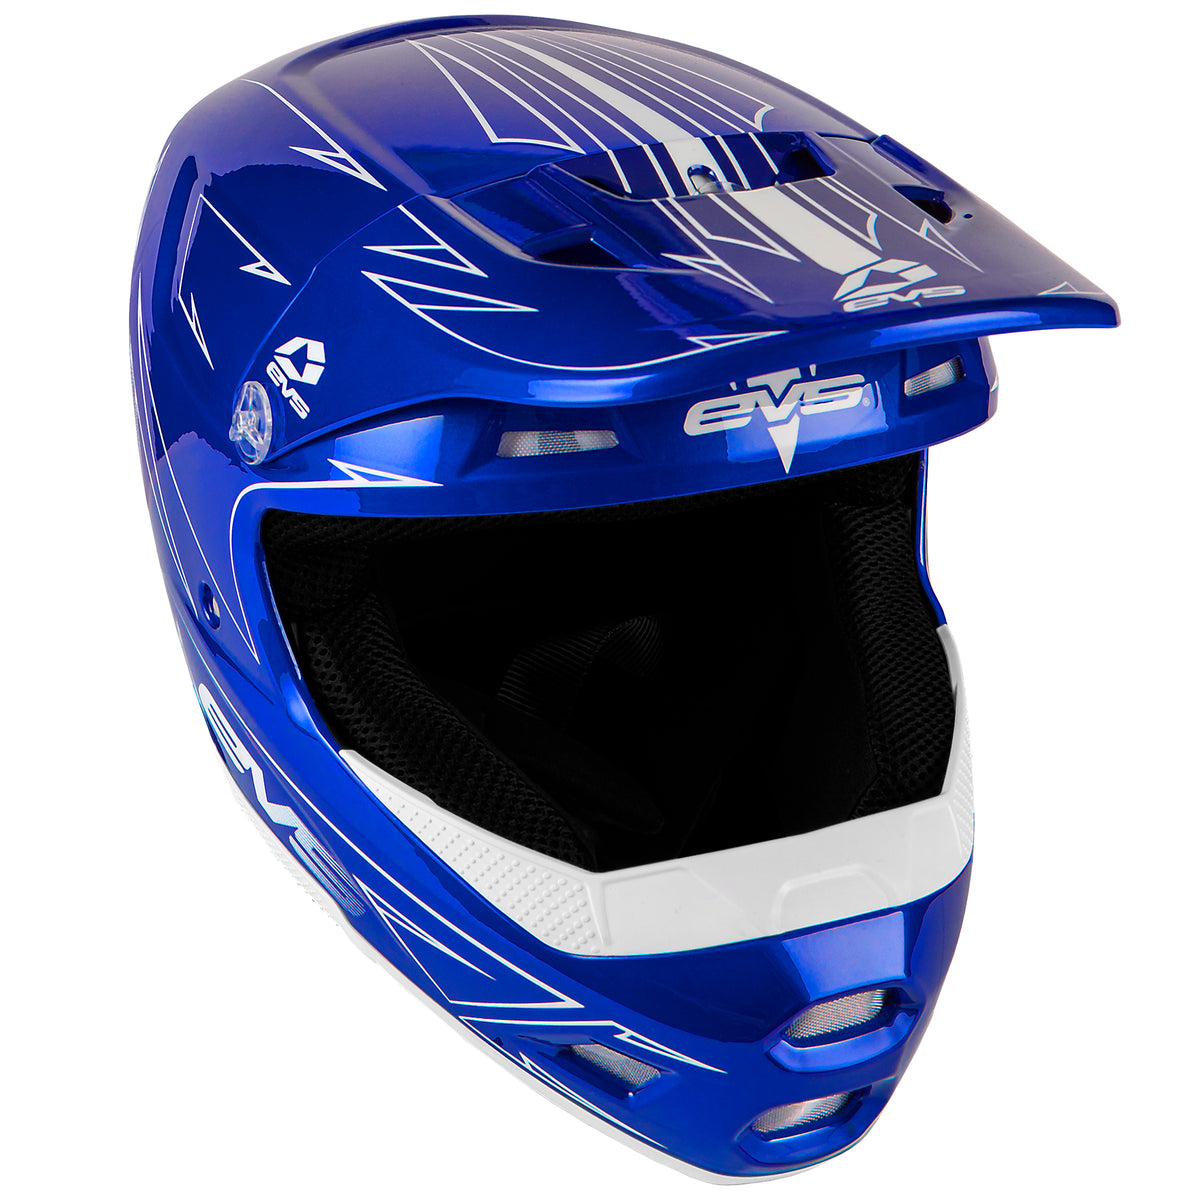 T3 Youth Helmet - Pinner Blue - EVS Sports